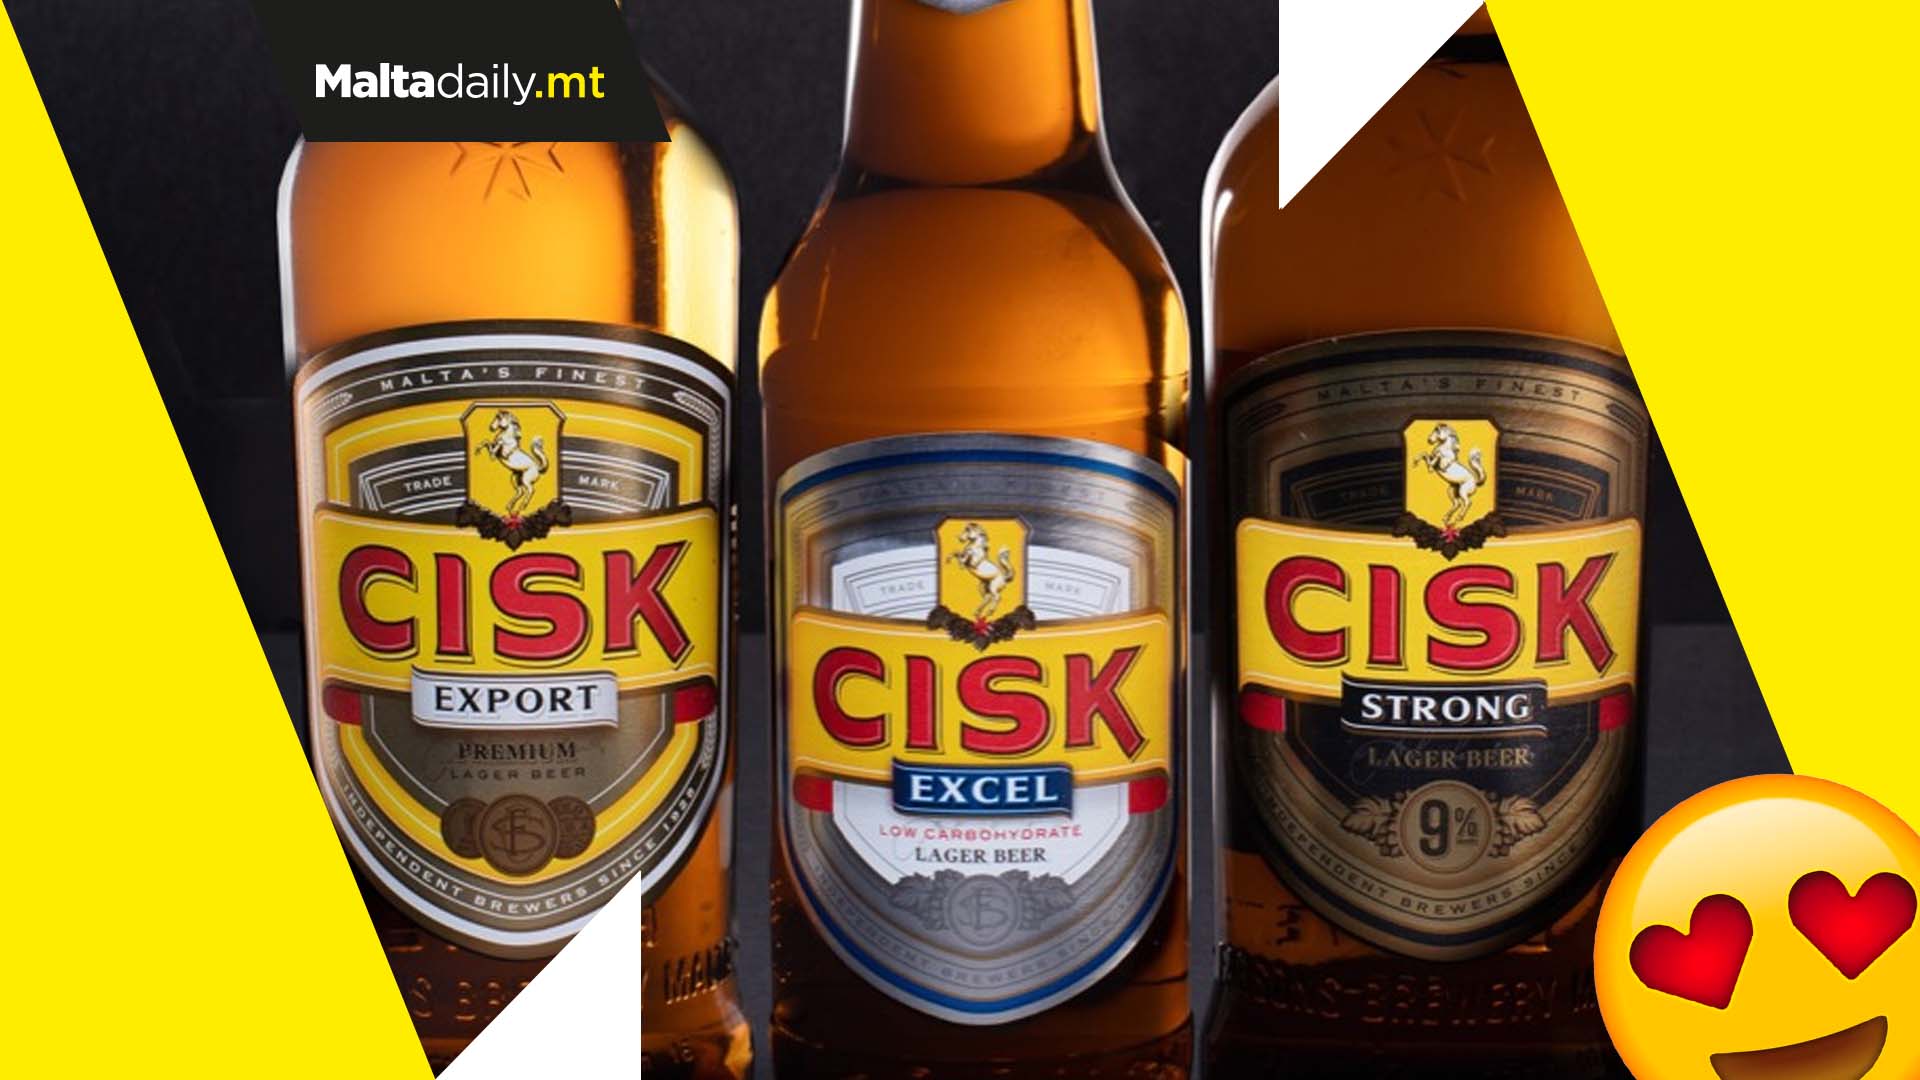 Malta’s favourite beer Cisk takes home multiple international awards